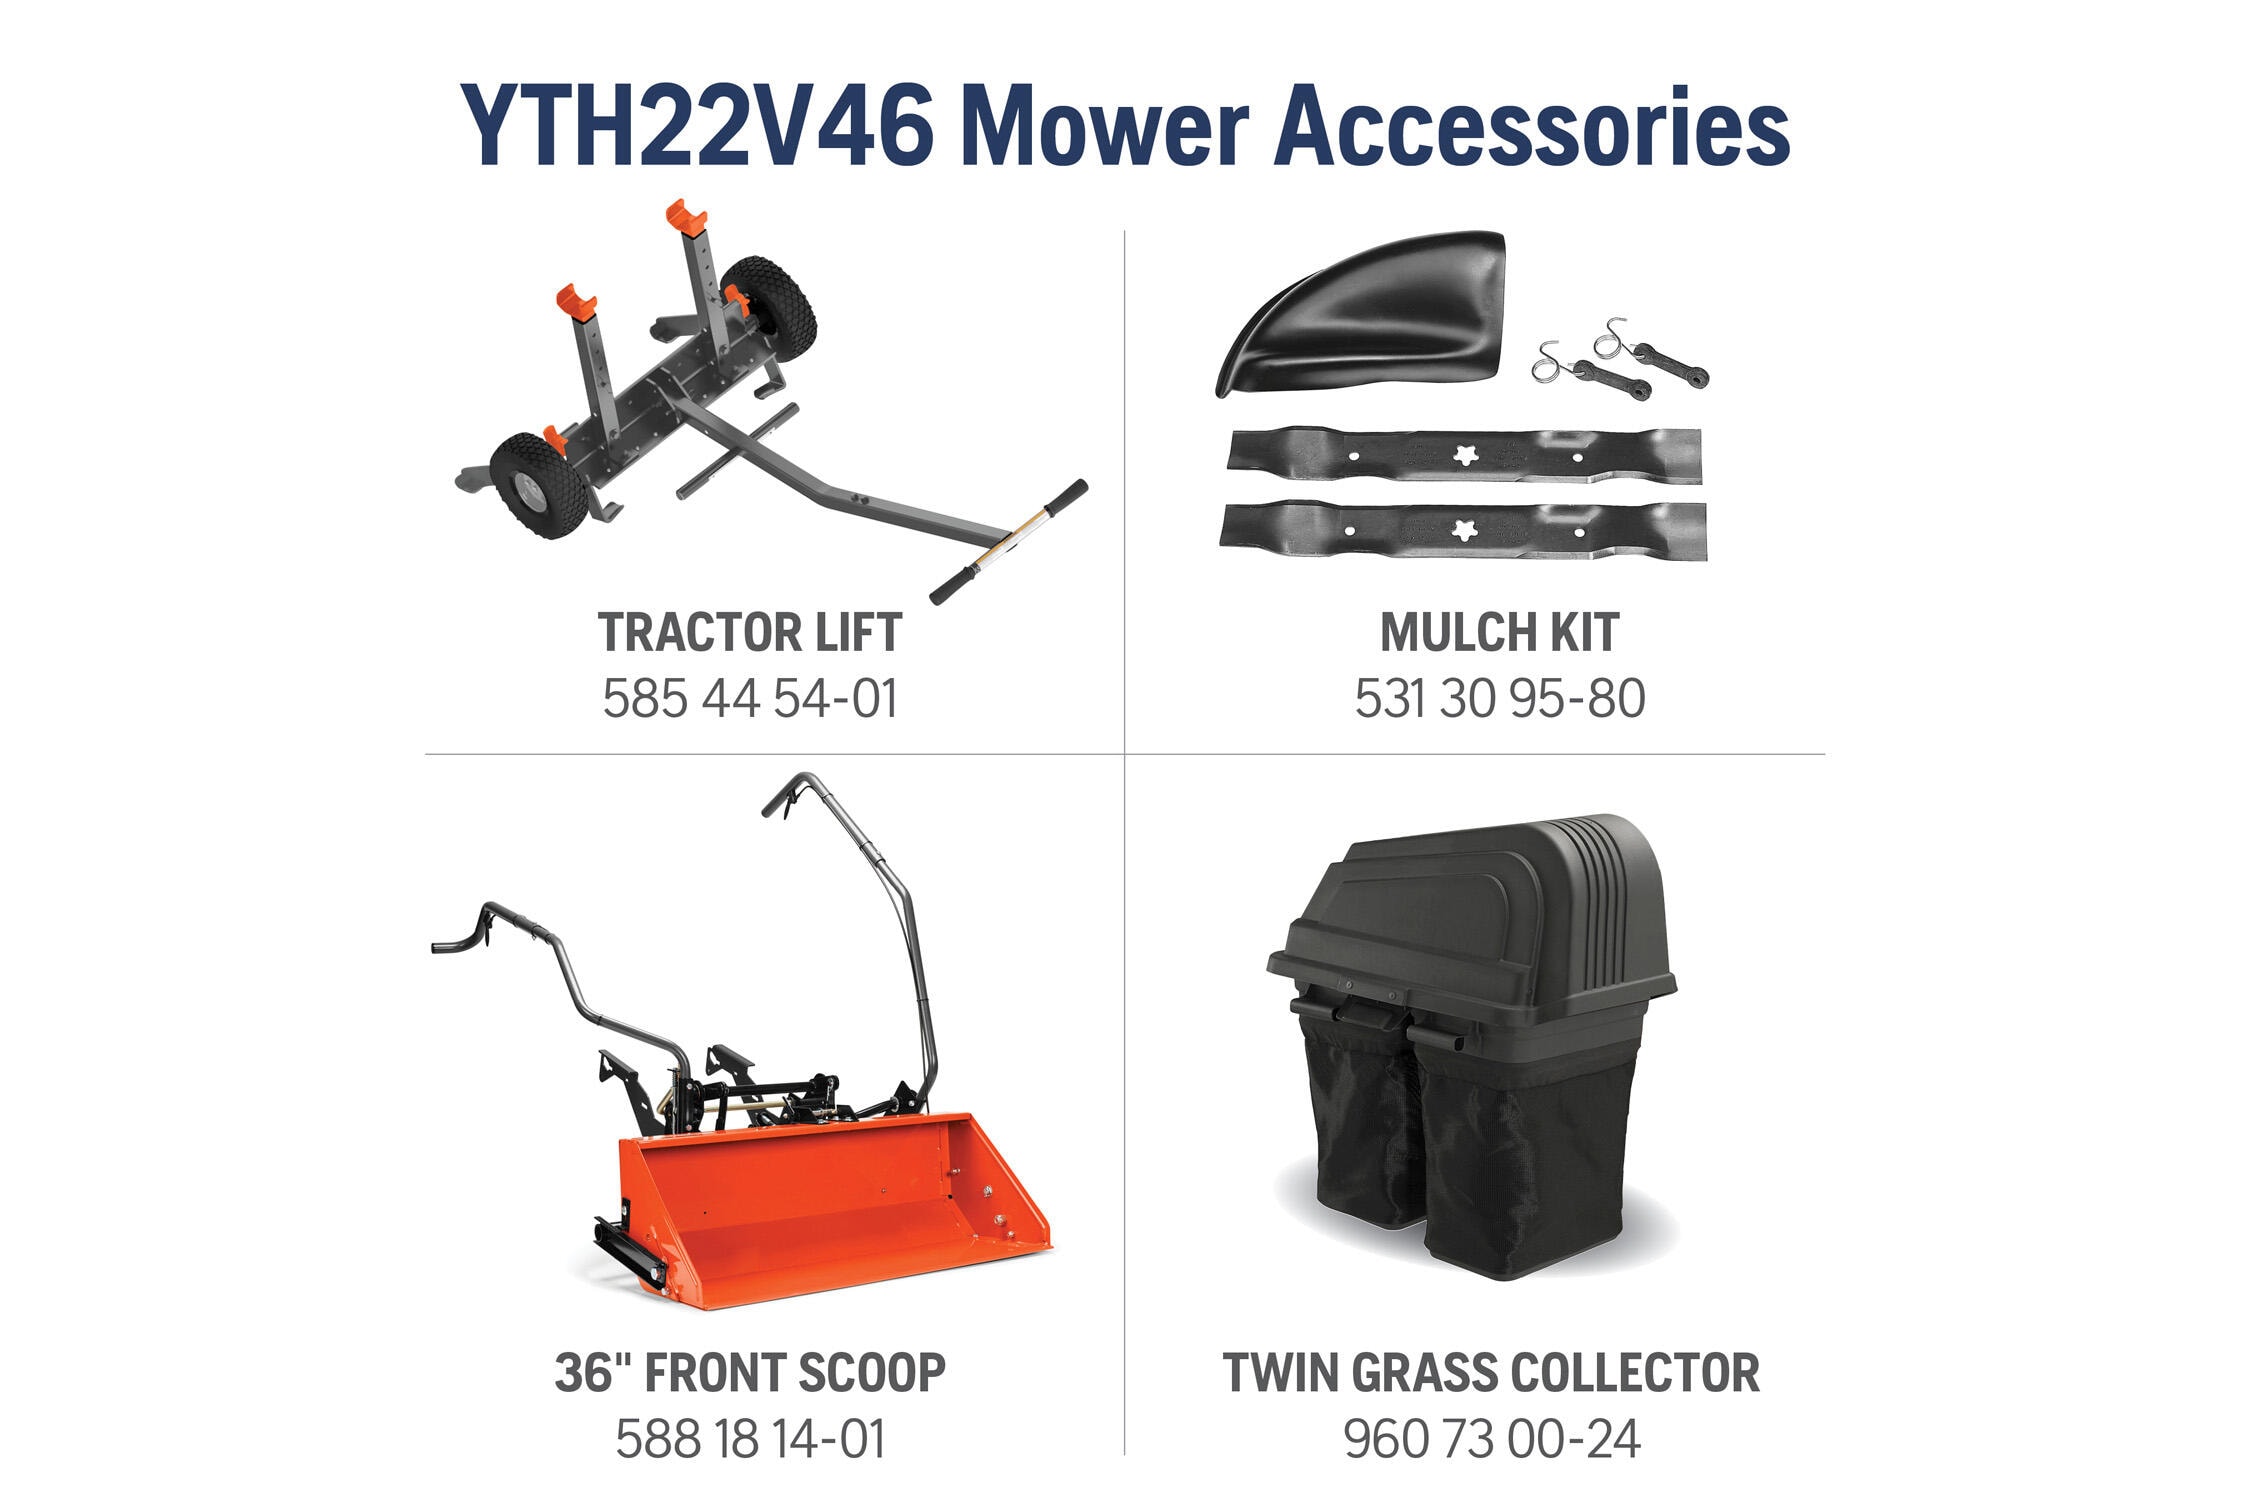 Husqvarna YTH22V46 46-in 22-HP V-twin Gas Riding Lawn Mower in the 